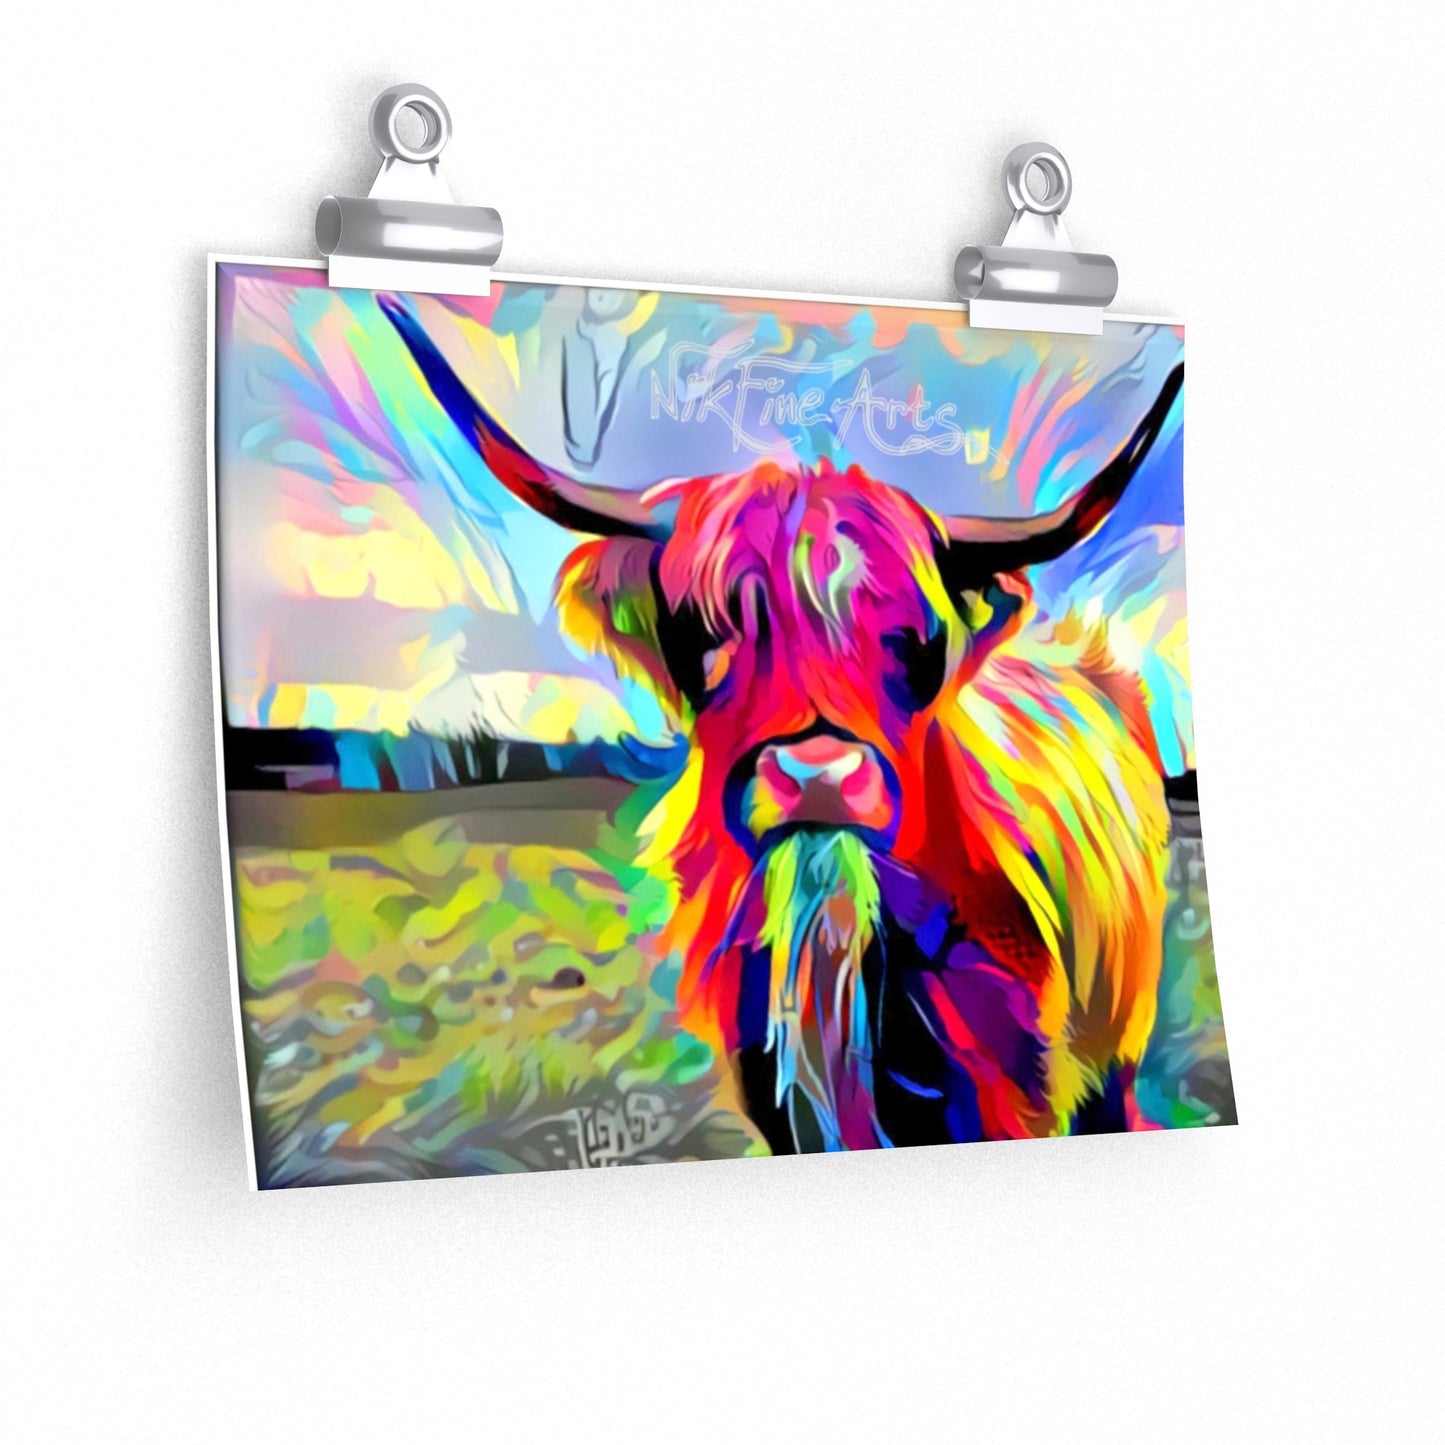 Colorful cow Premium Matte horizontal posters fine art decor gift bestseller art*